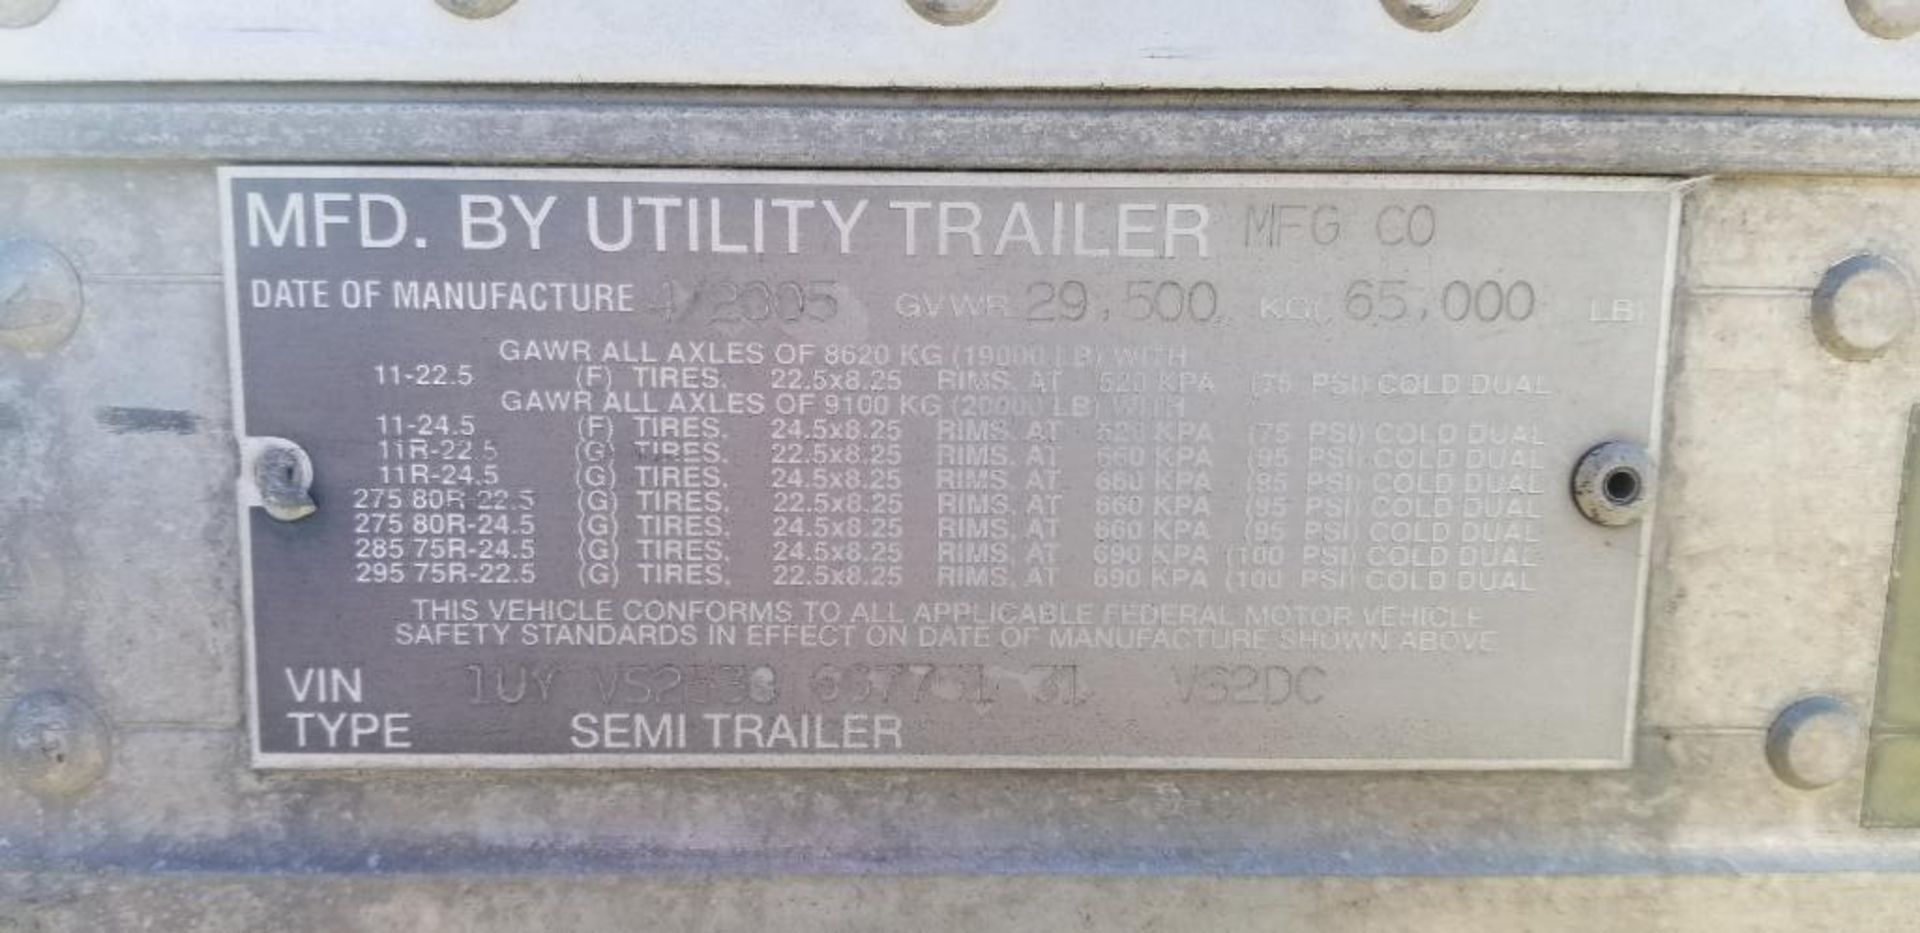 2005 Utility Dry Van Box Trailer, VIN: 1UY VS2538 6G7751 31 VS2DC, GVWR 65,000 LB., w/ Content, Poly - Image 5 of 5